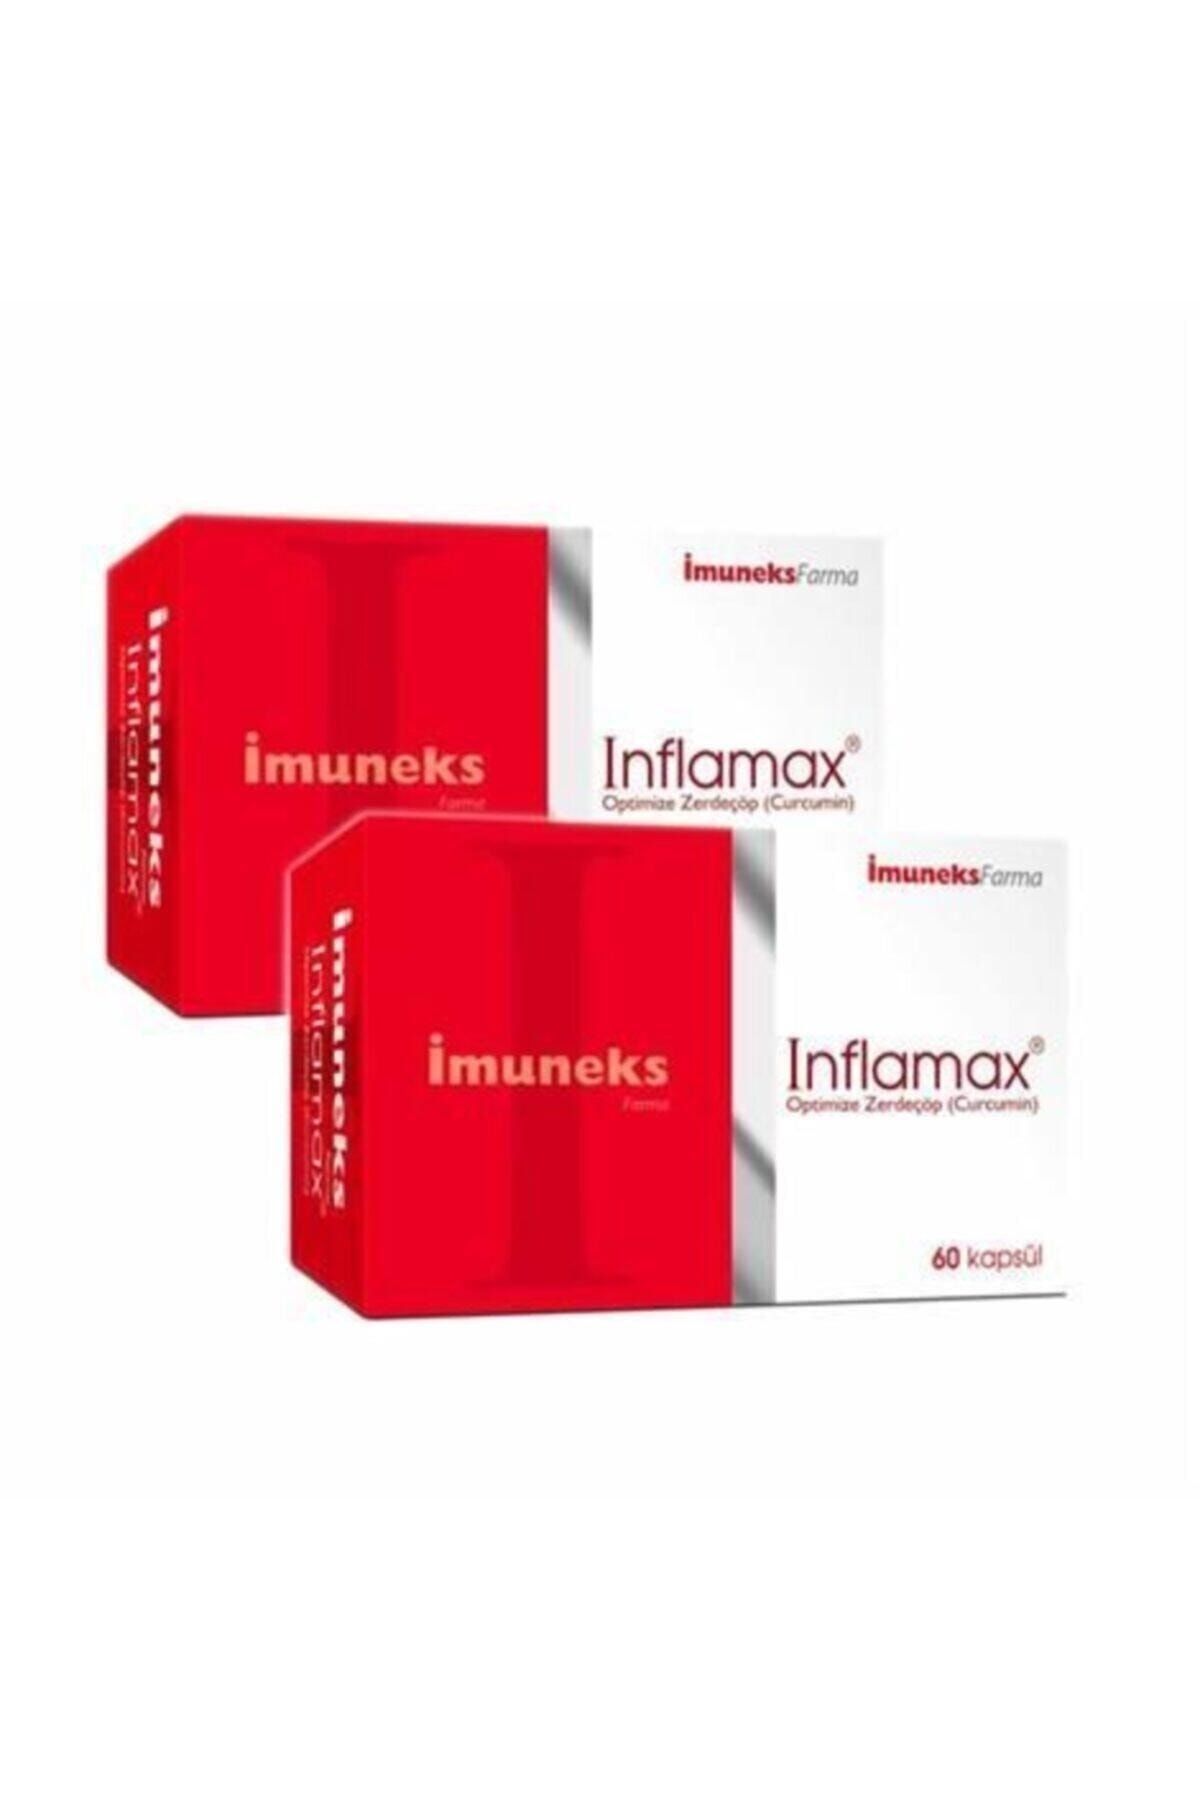 Imuneks Inflamax Optimize Zerdeçöp 60 Kapsül 2 Adet